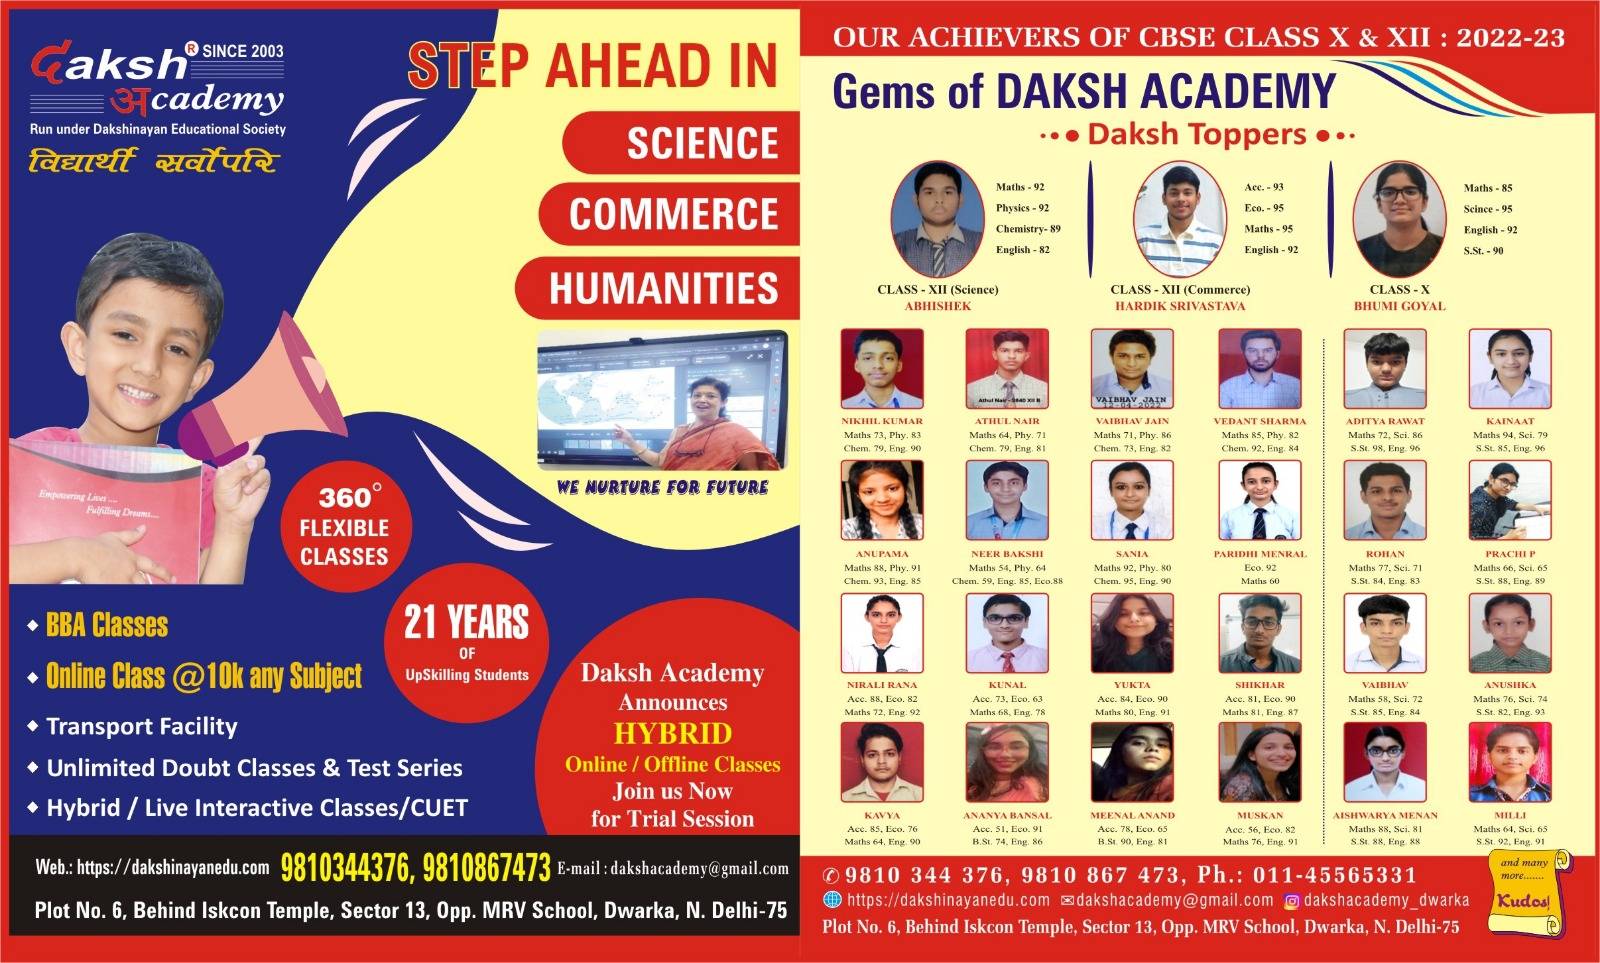 Daksh Academy Achiever of the Year - 2022-23